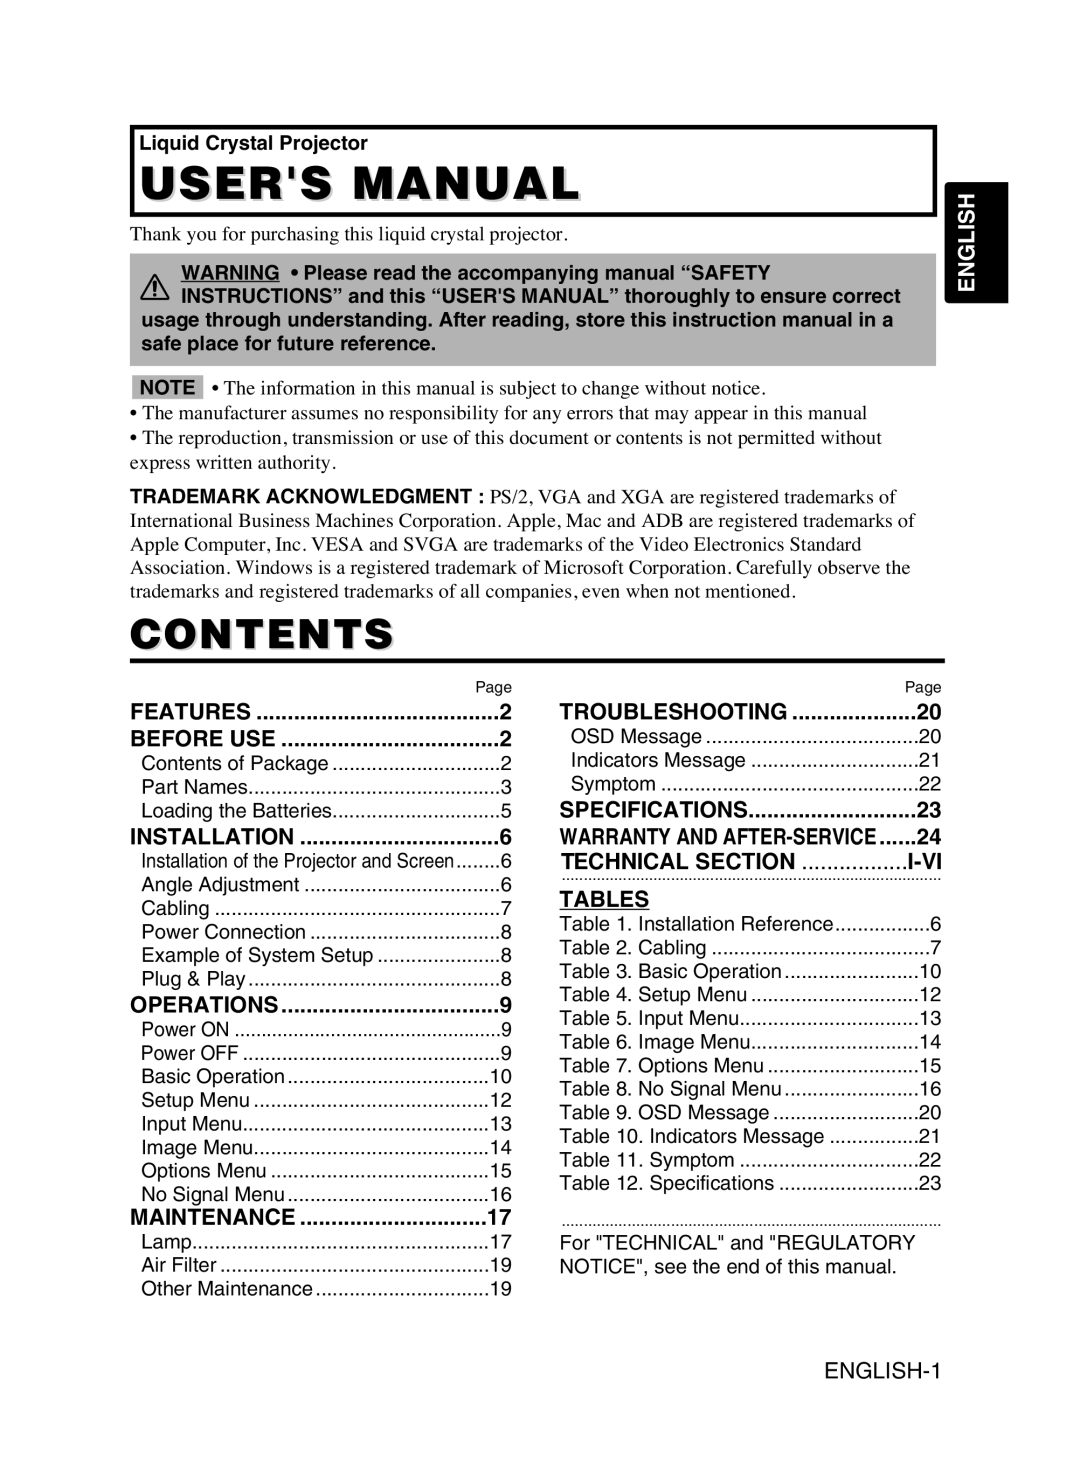 Dukane 8053 user manual Contents, English, I-Vi, Tables, Users Manual 